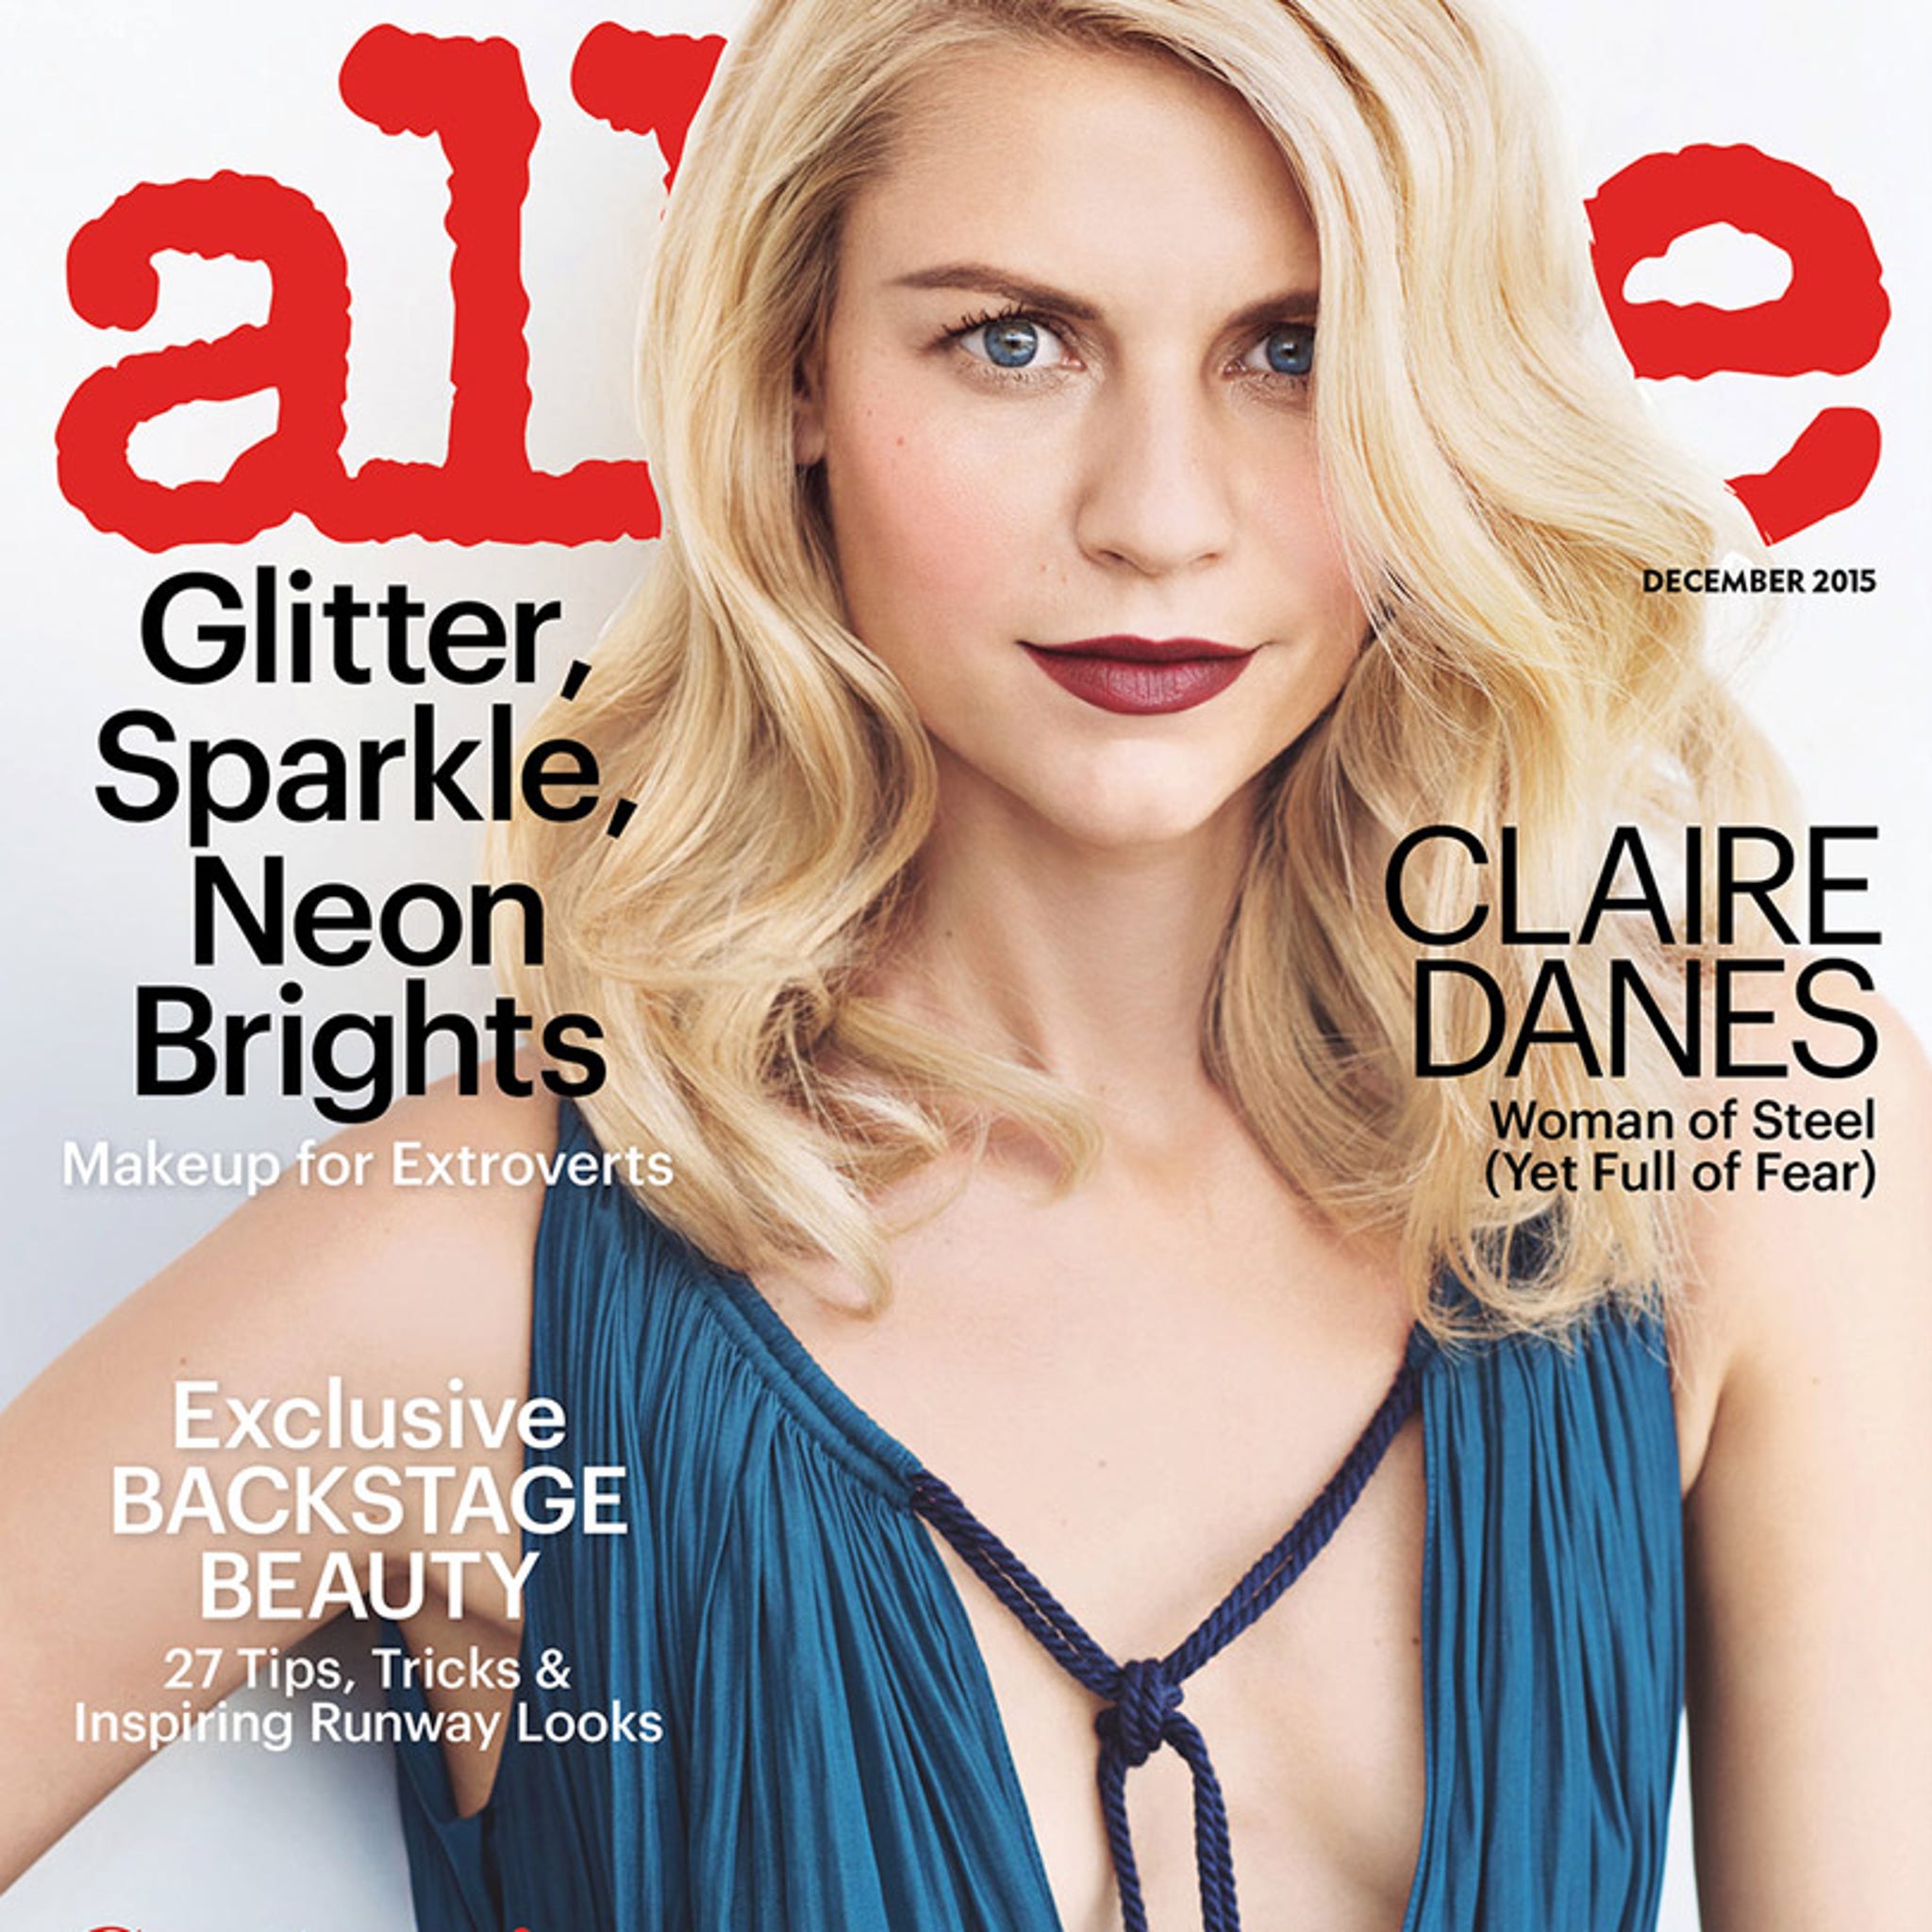 Claire Danes - Exclusive Interviews, Pictures & More